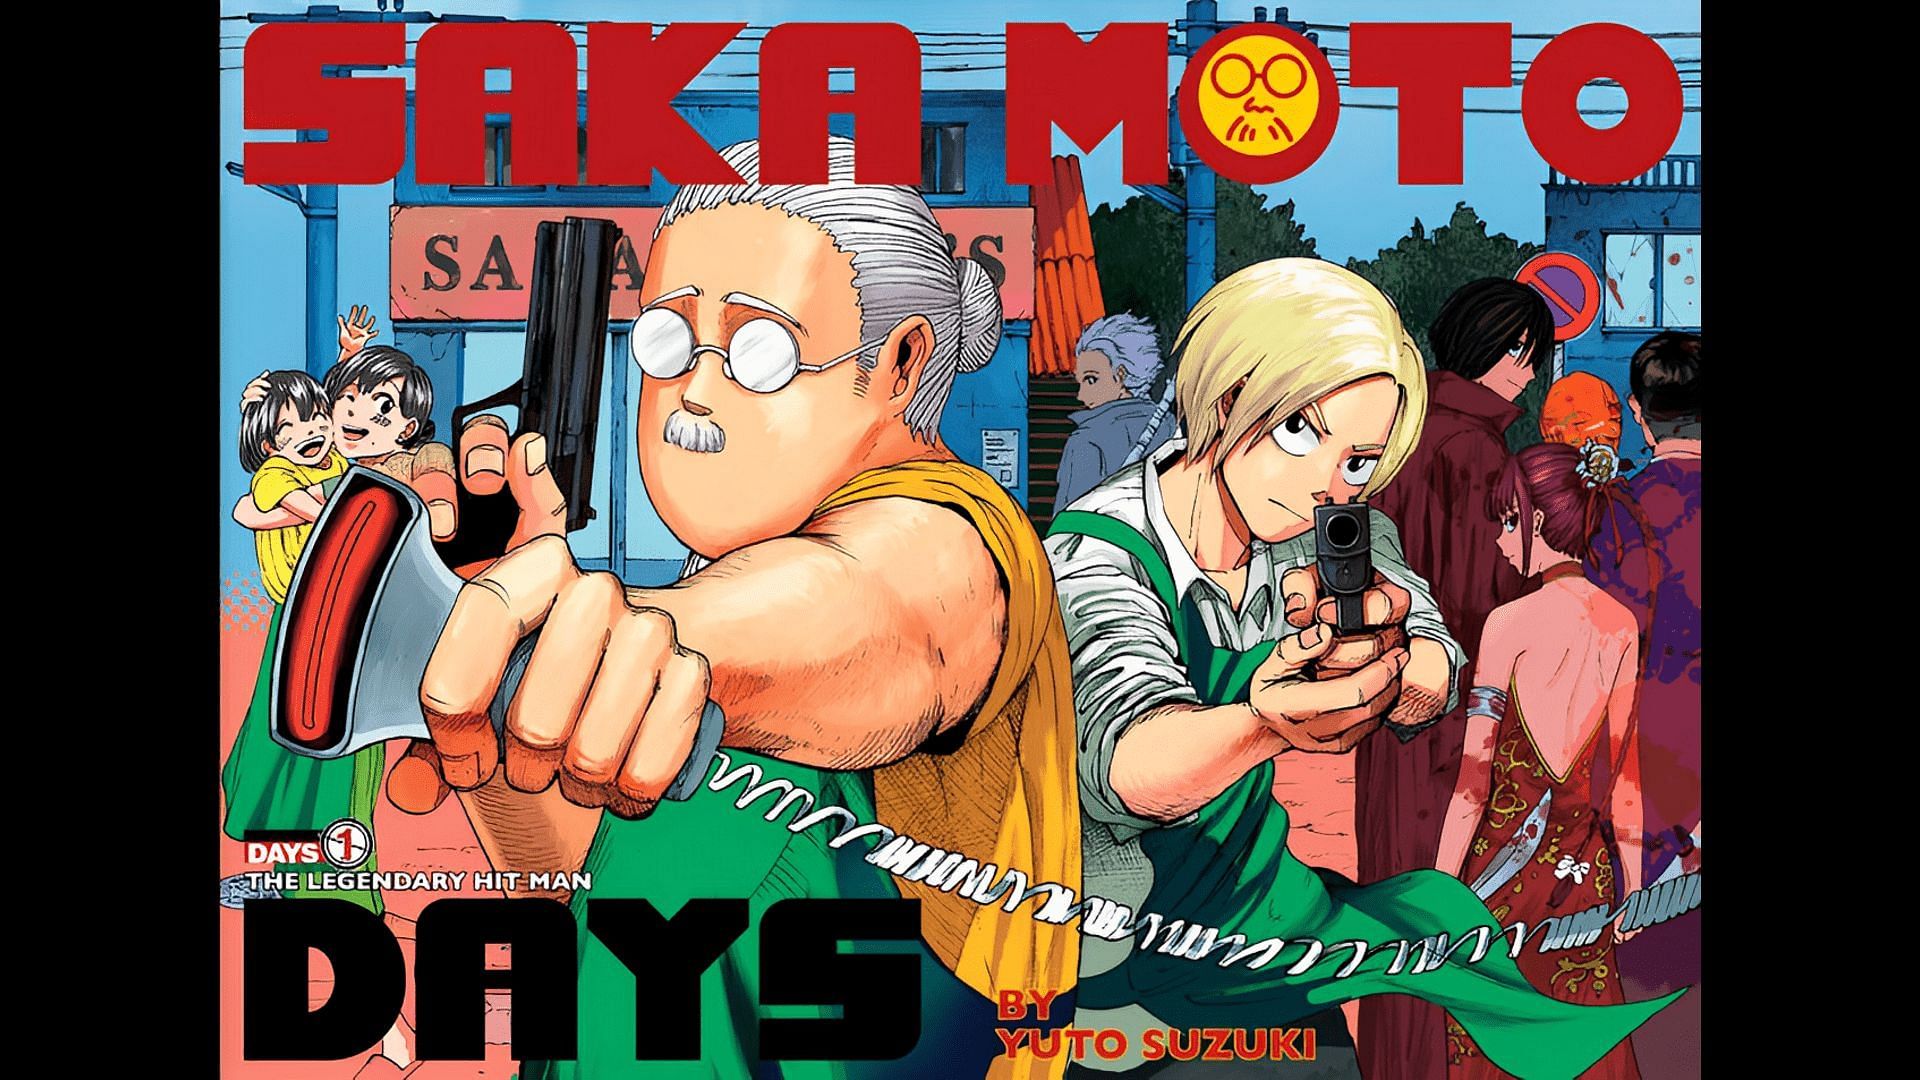 Is Sakamoto Days Getting an Anime Adaptation? — Guildmv